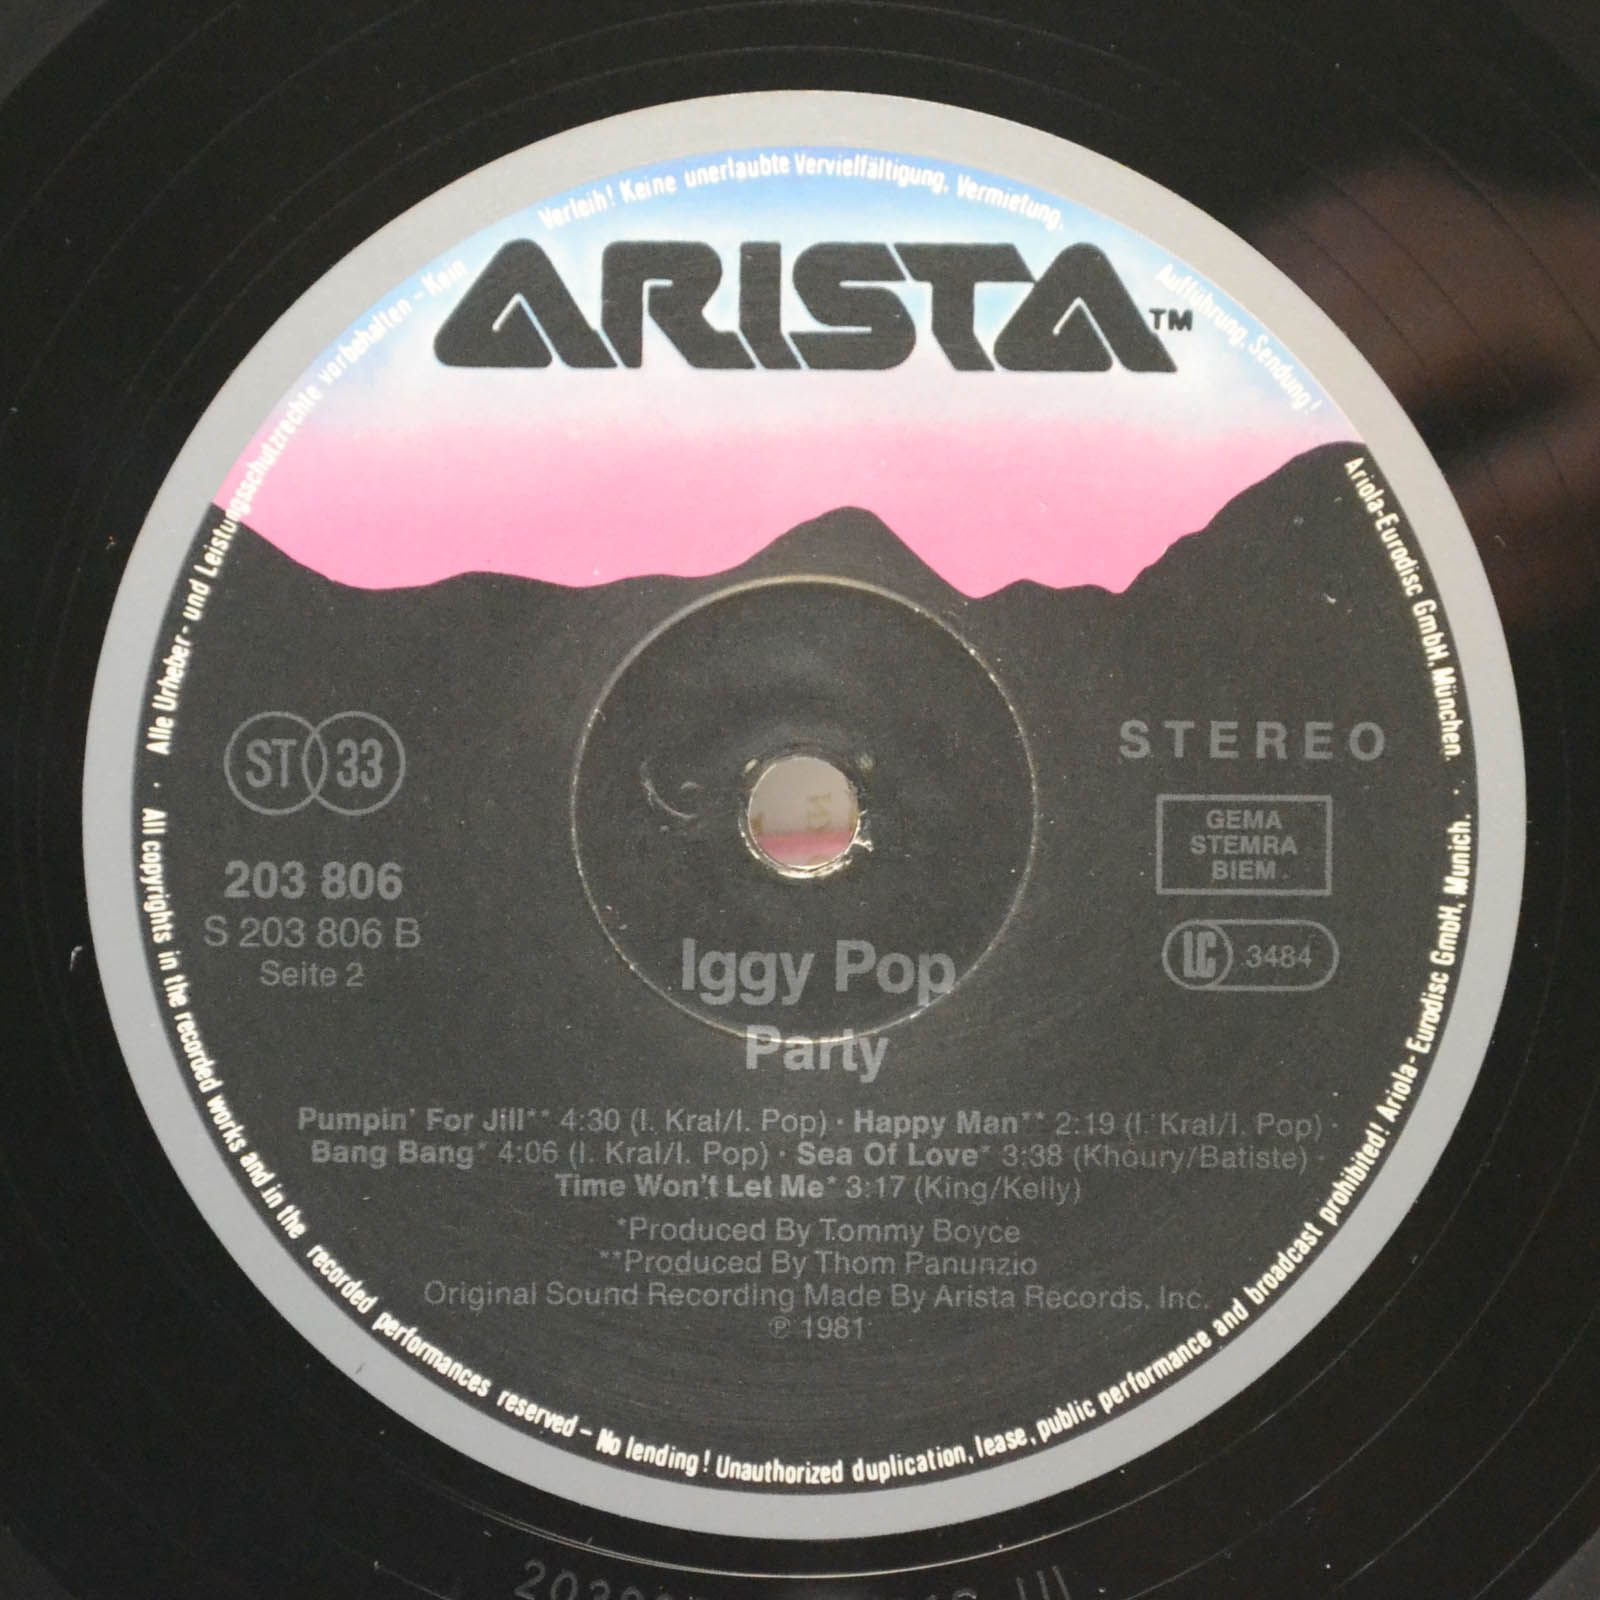 Iggy Pop — Party, 1981